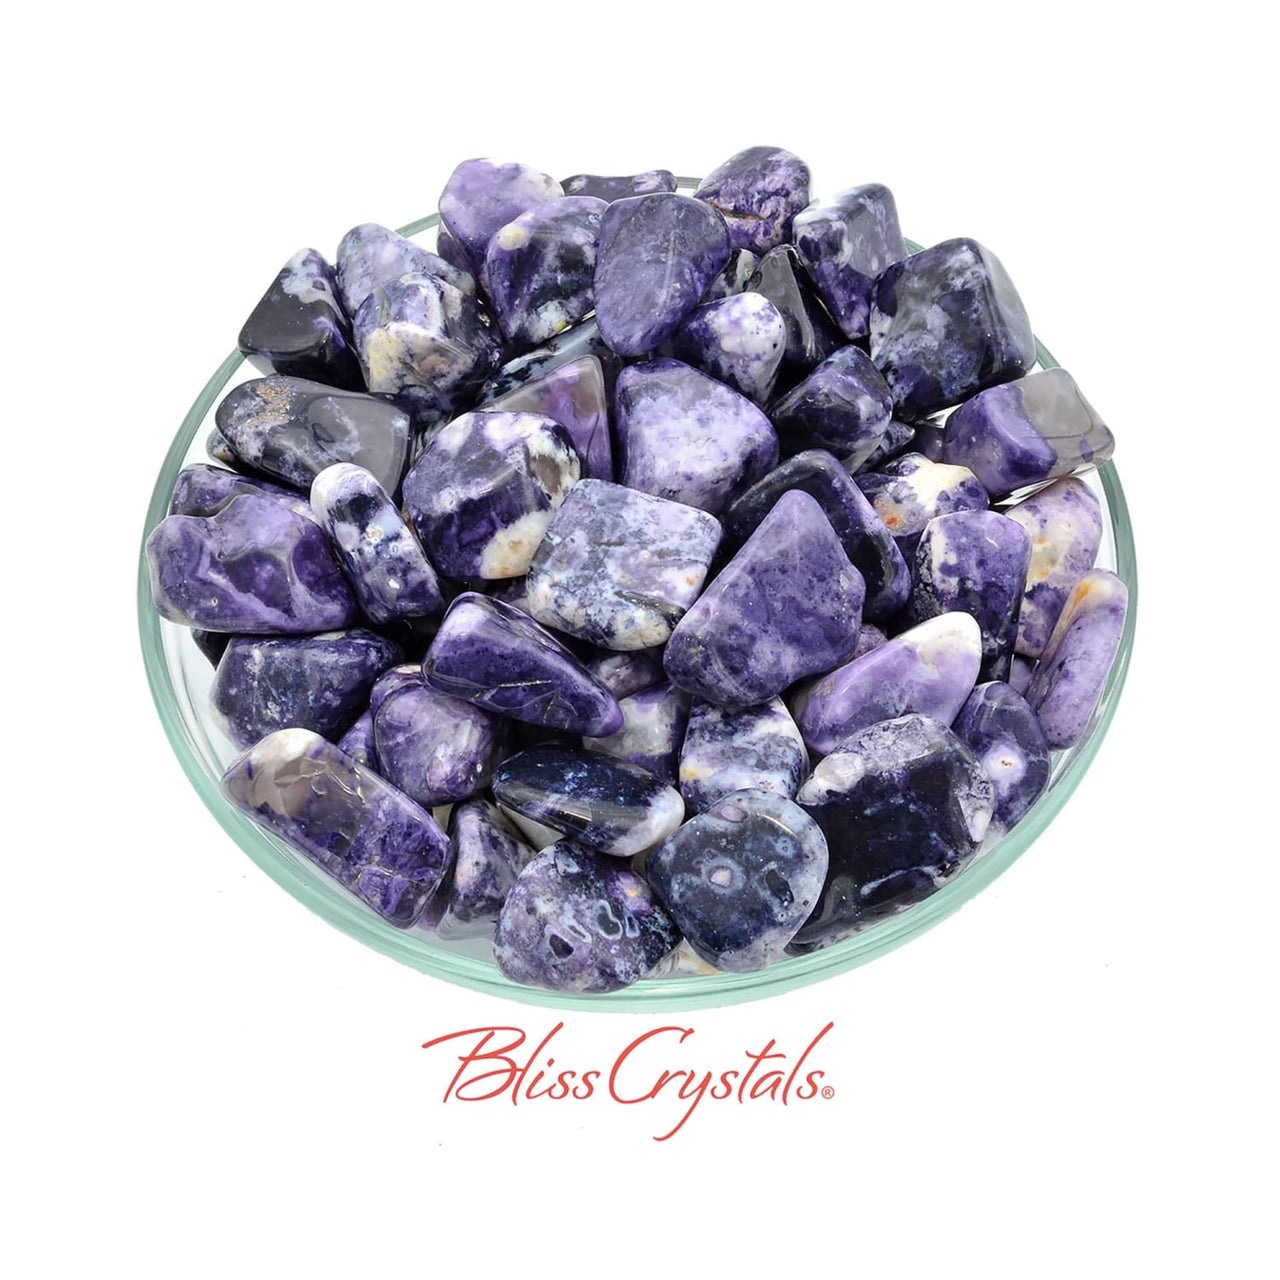 1 Dark Purple Opal in Quartz Tumbled Stone aka Mexican 